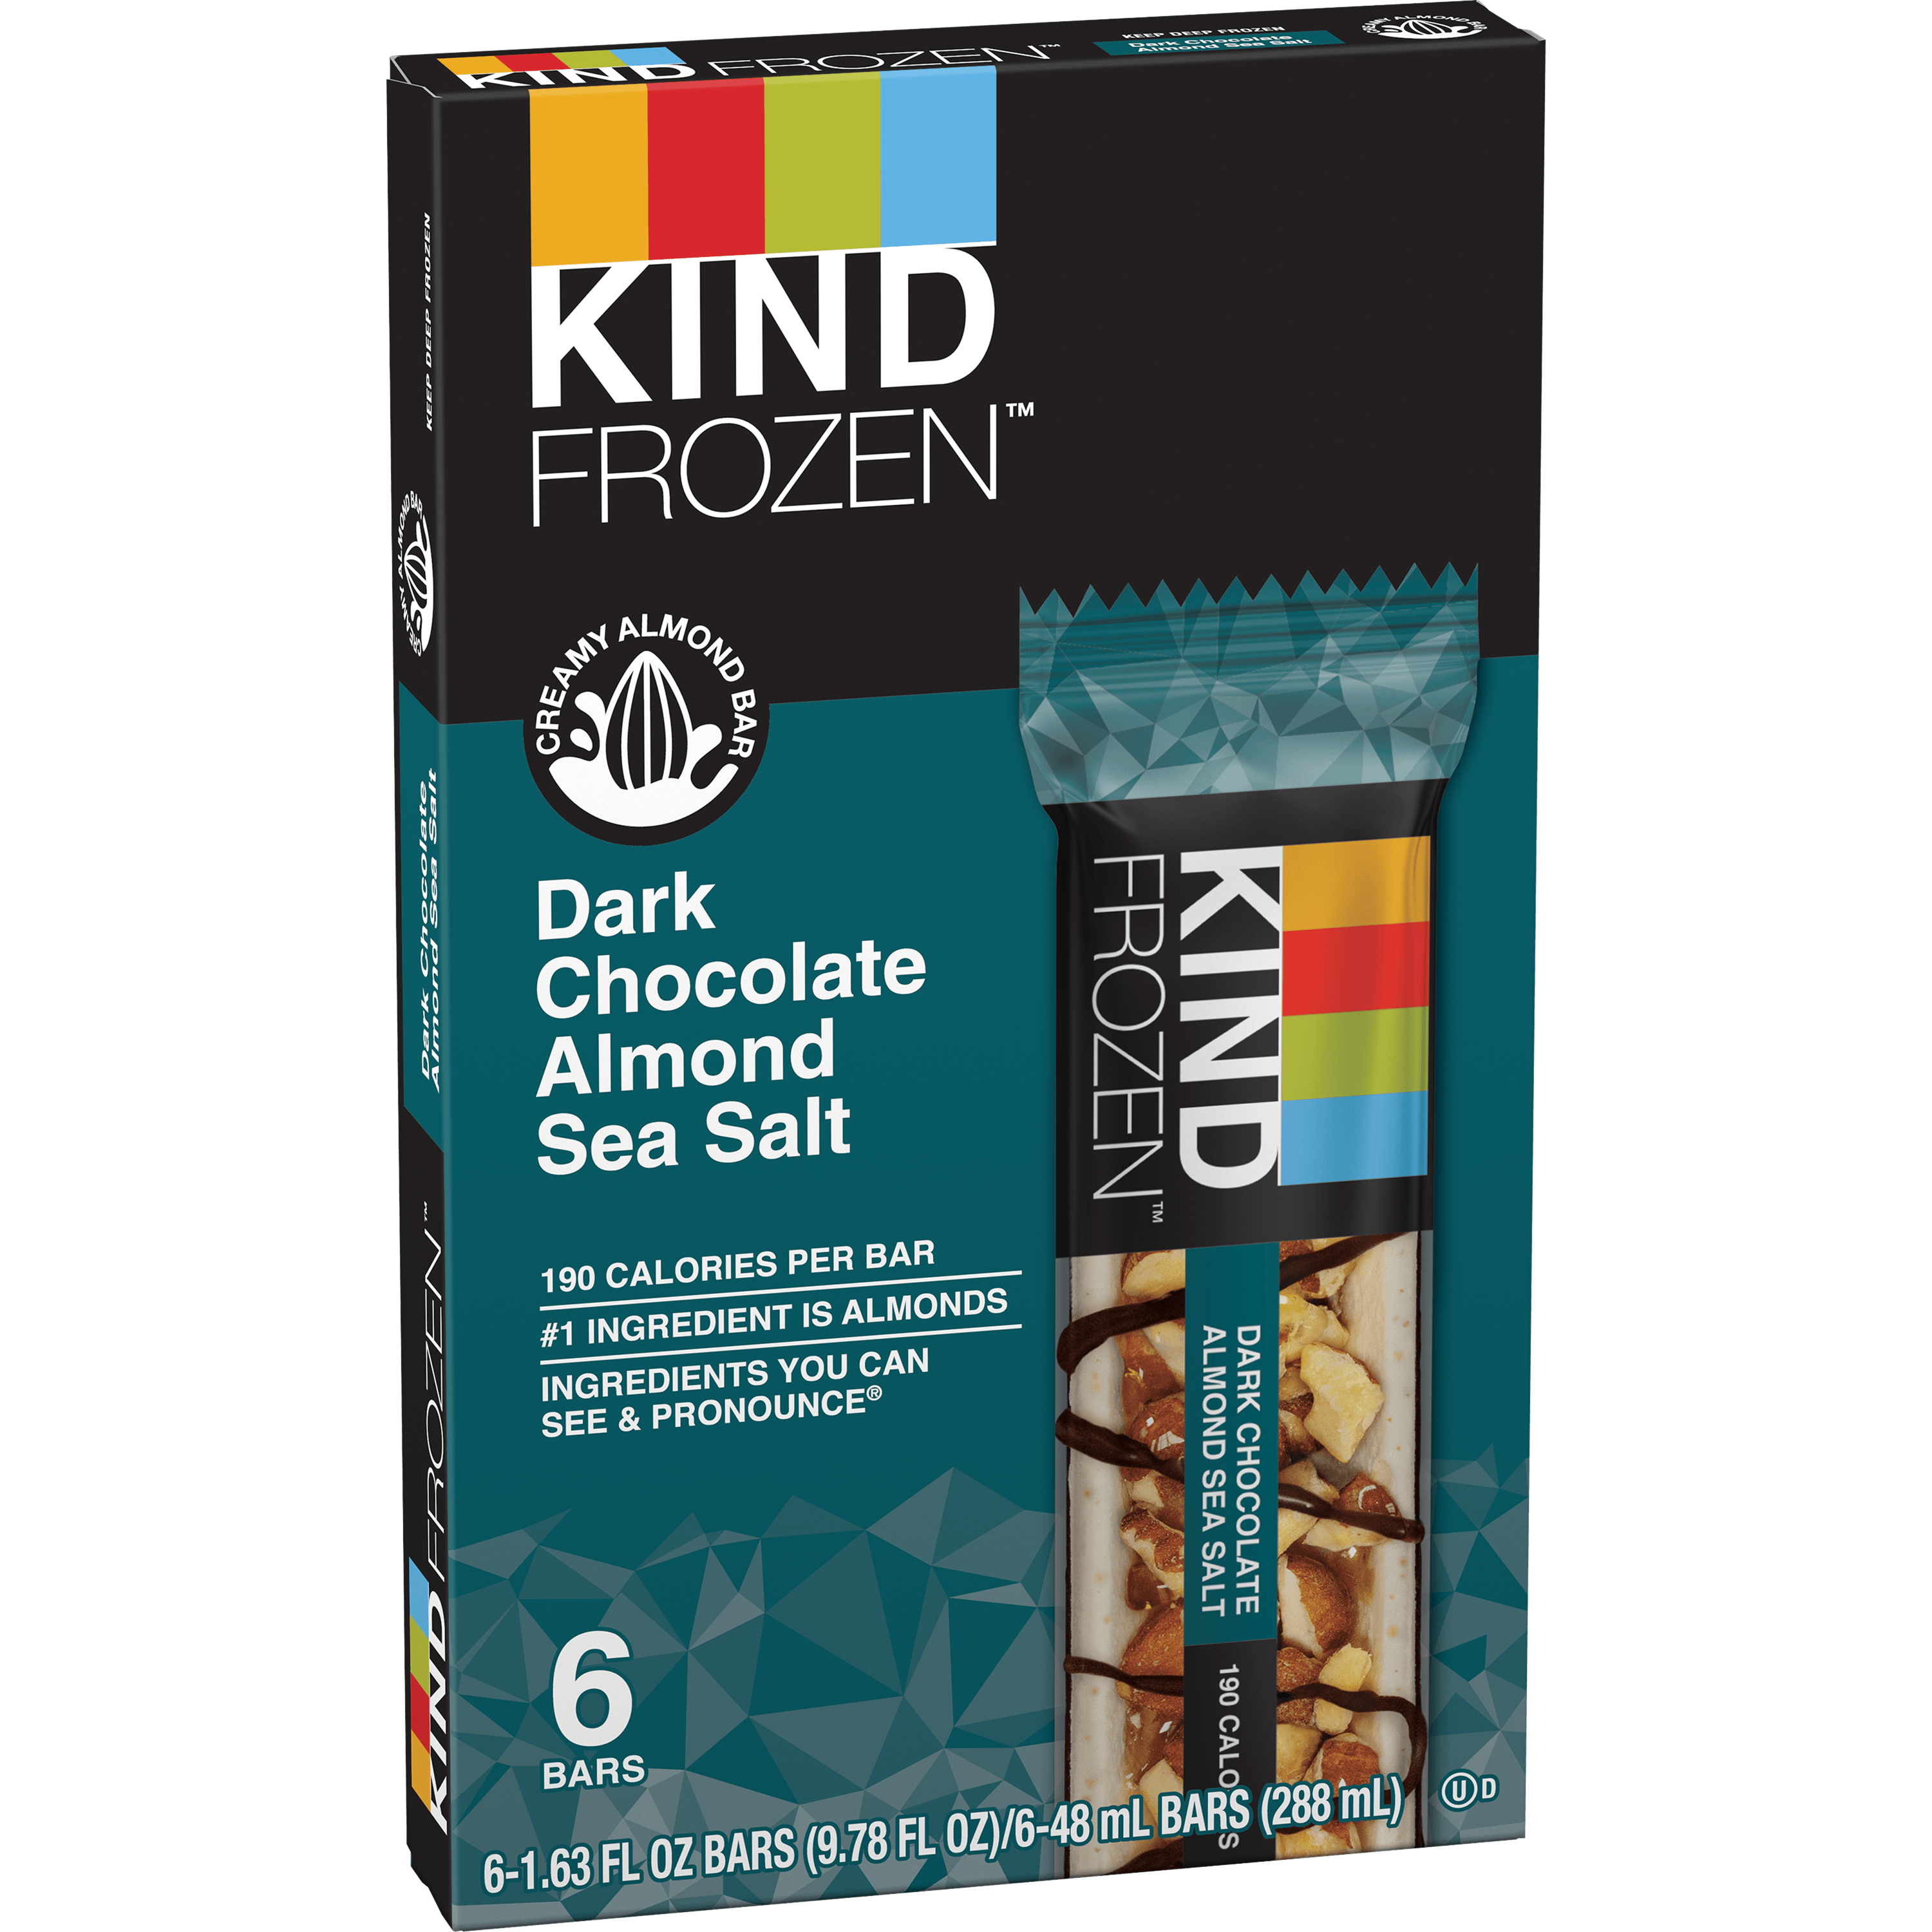 KIND FROZEN Dark Chocolate Almond Sea Salt Bars 6 Count Box - image 1 of 5